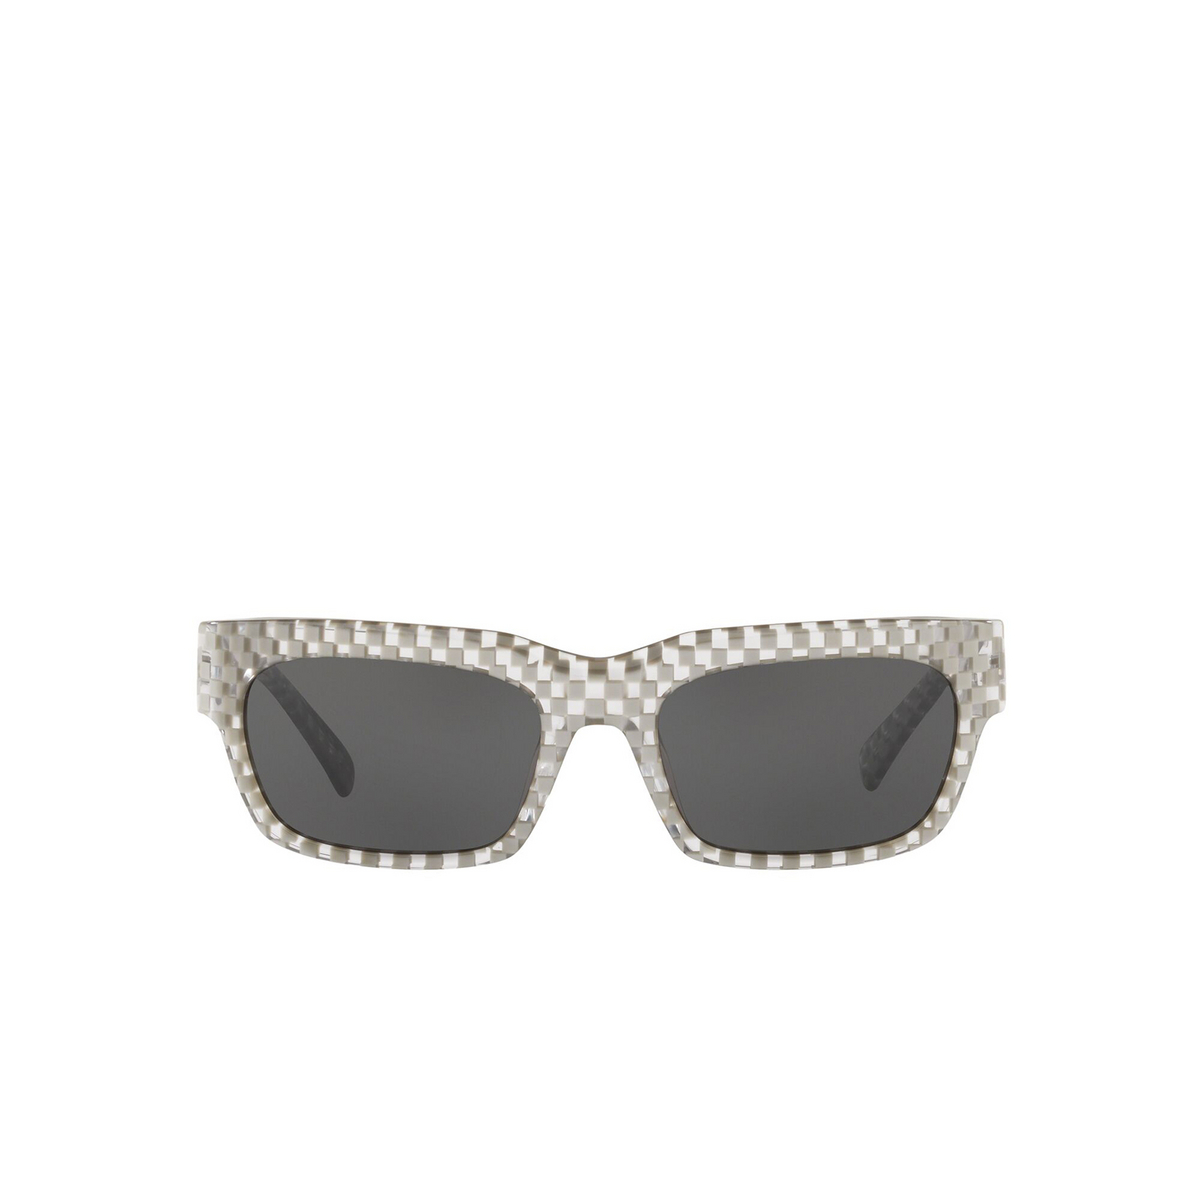 Alain Mikli® Square Sunglasses: Orage A05042 color Silver Damier 002/73 - front view.